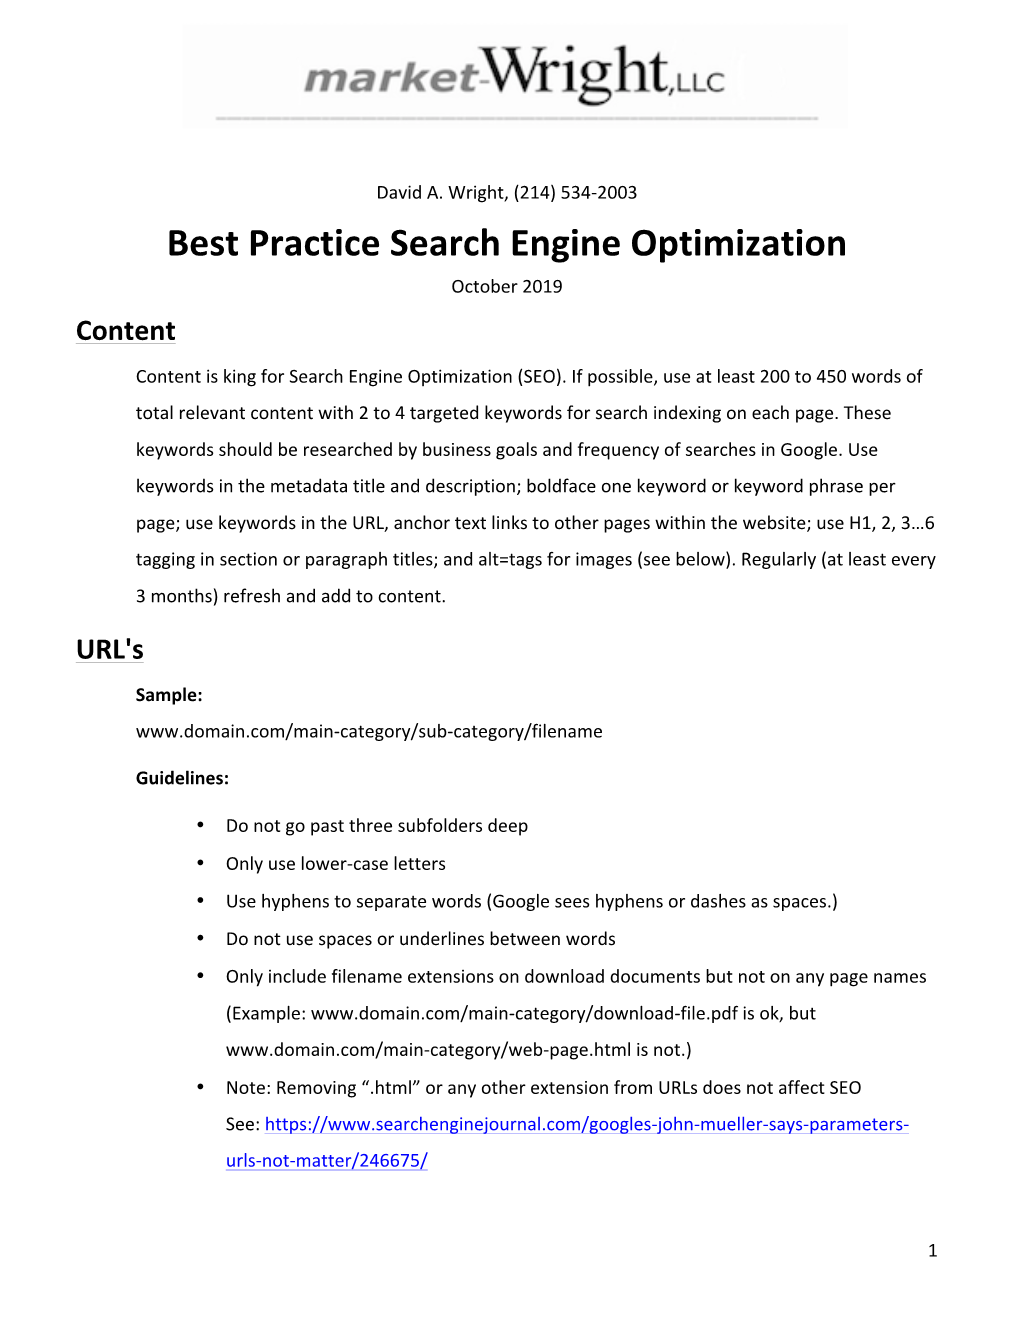 David Wright Best Practice Search Engine Optimization